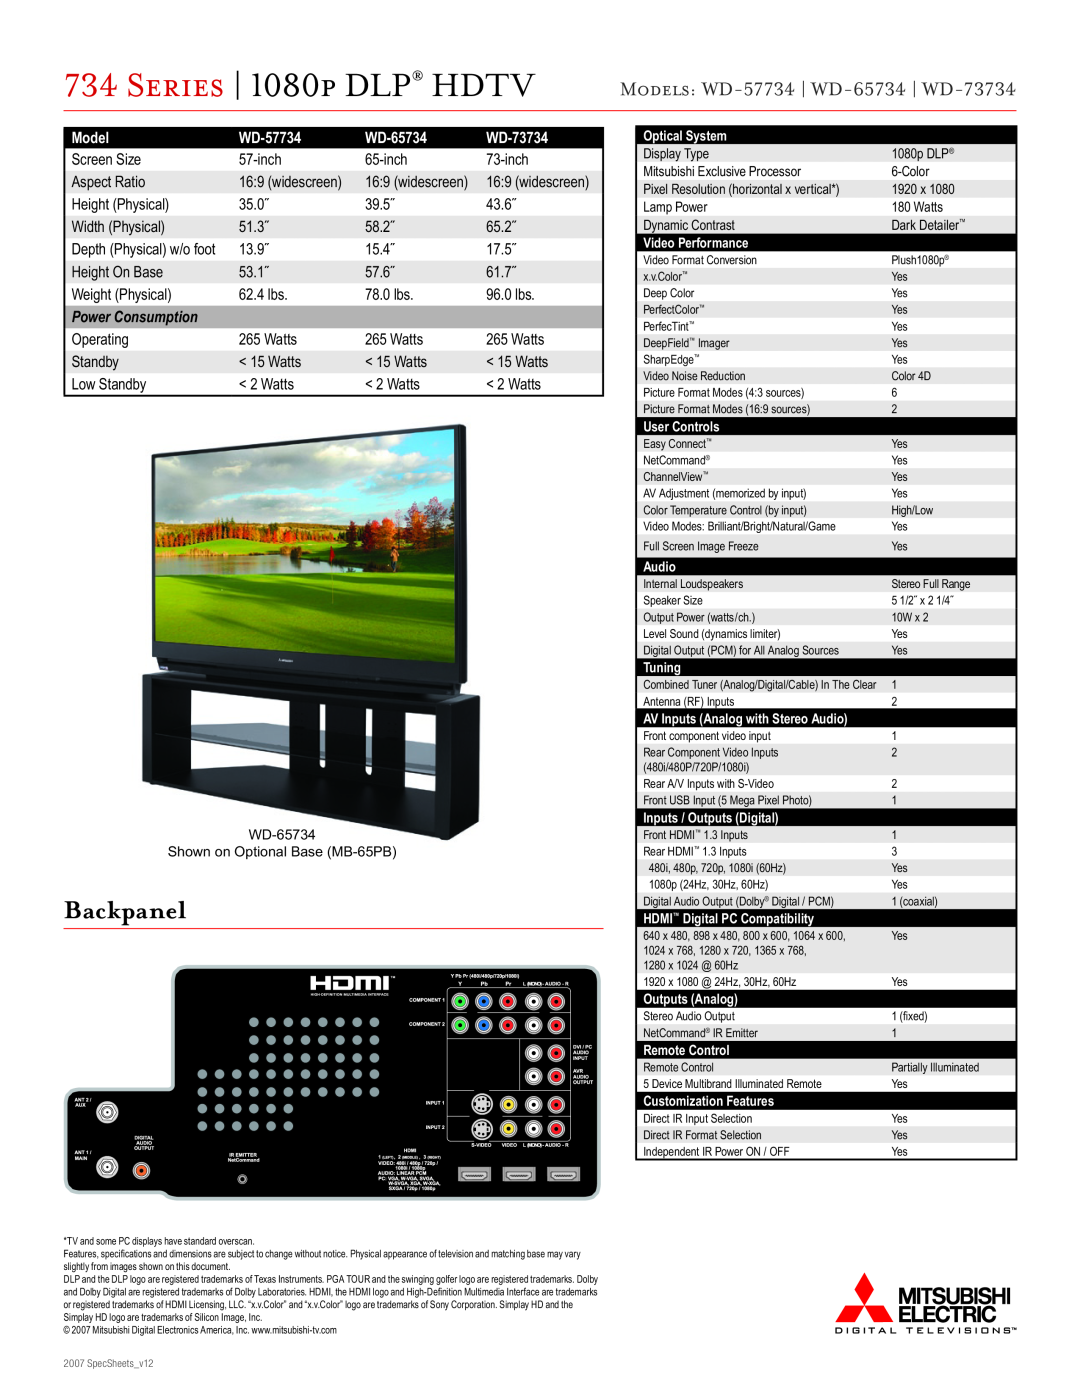 Mitsubishi Electronics manual Backpanel, Series 1080p DLP HDTV, Models WD-57734 WD-65734 WD-73734, Power Consumption 